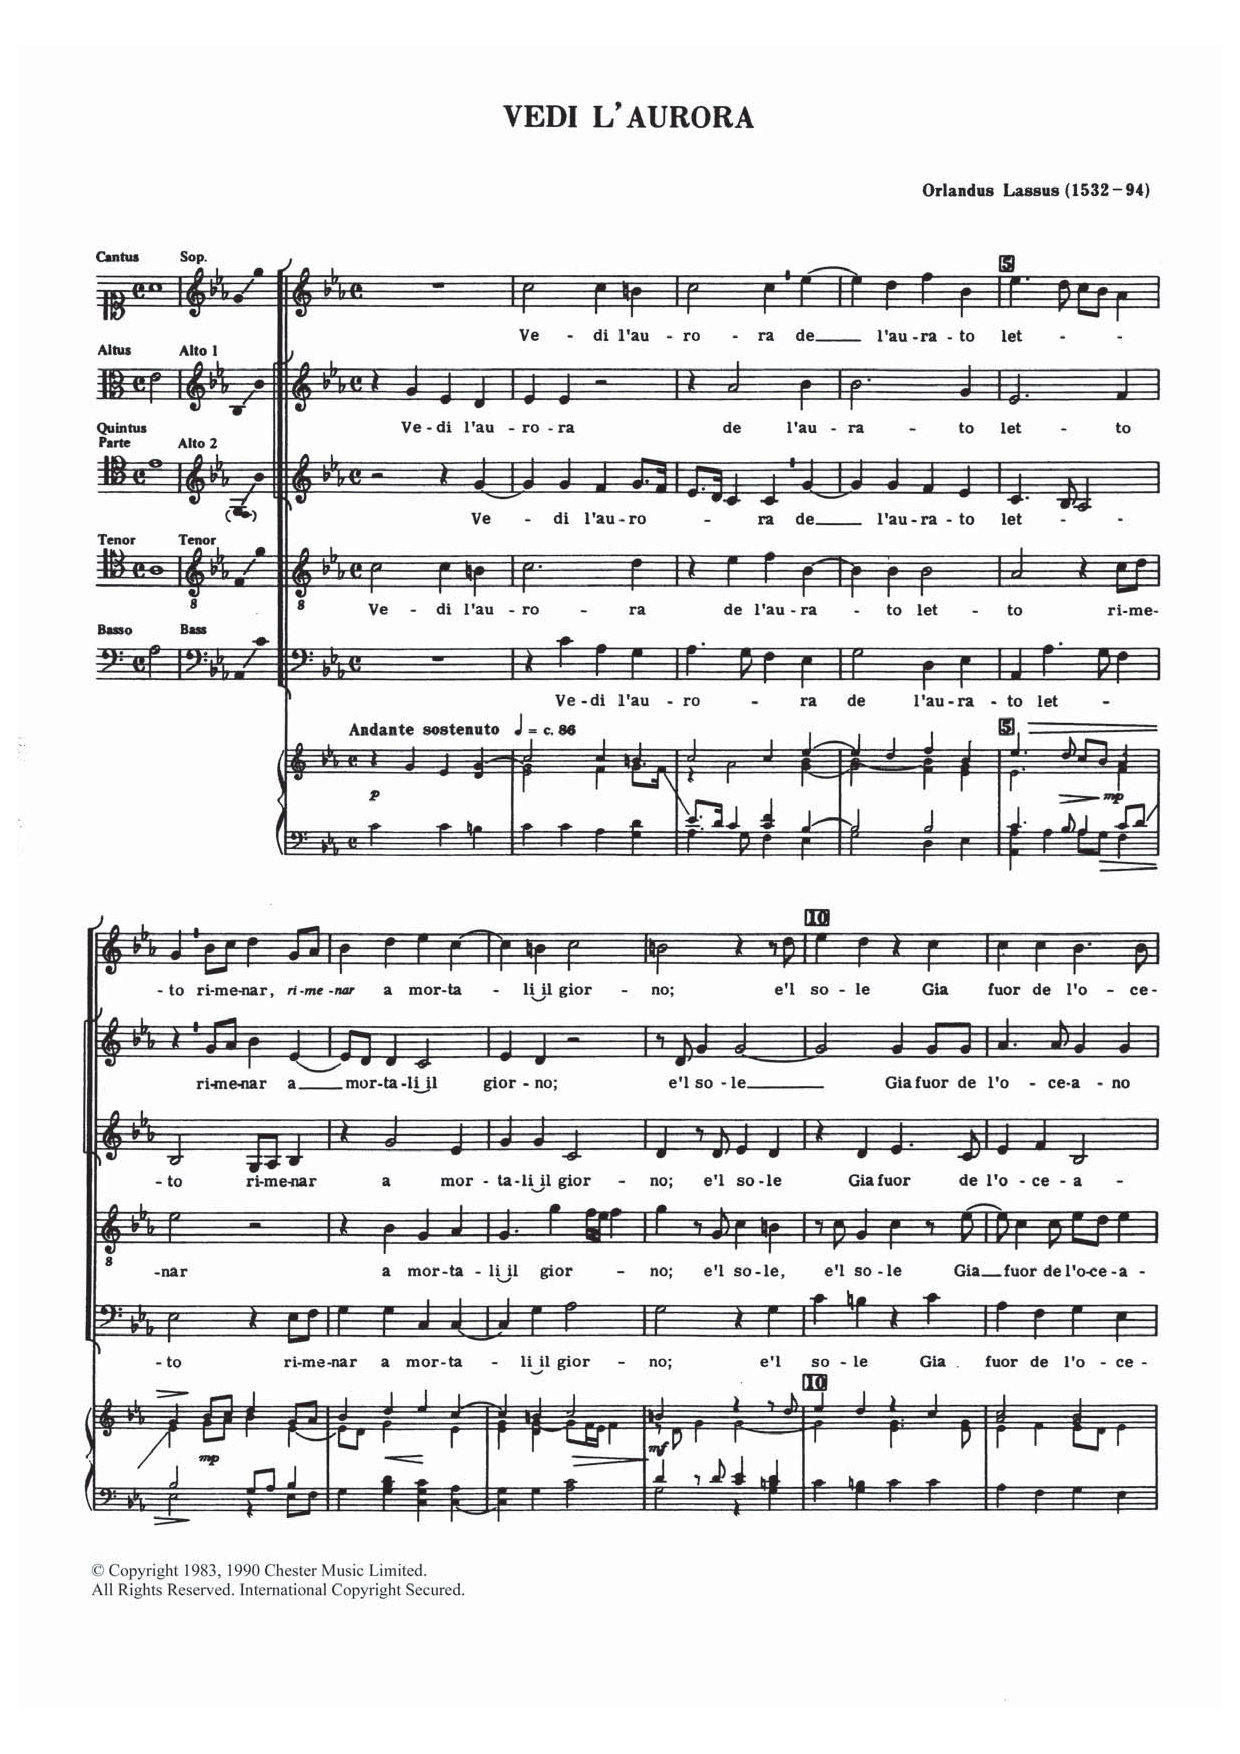 Orlandus Lassus Vedi L'aurora Sheet Music Notes & Chords for Choir - Download or Print PDF